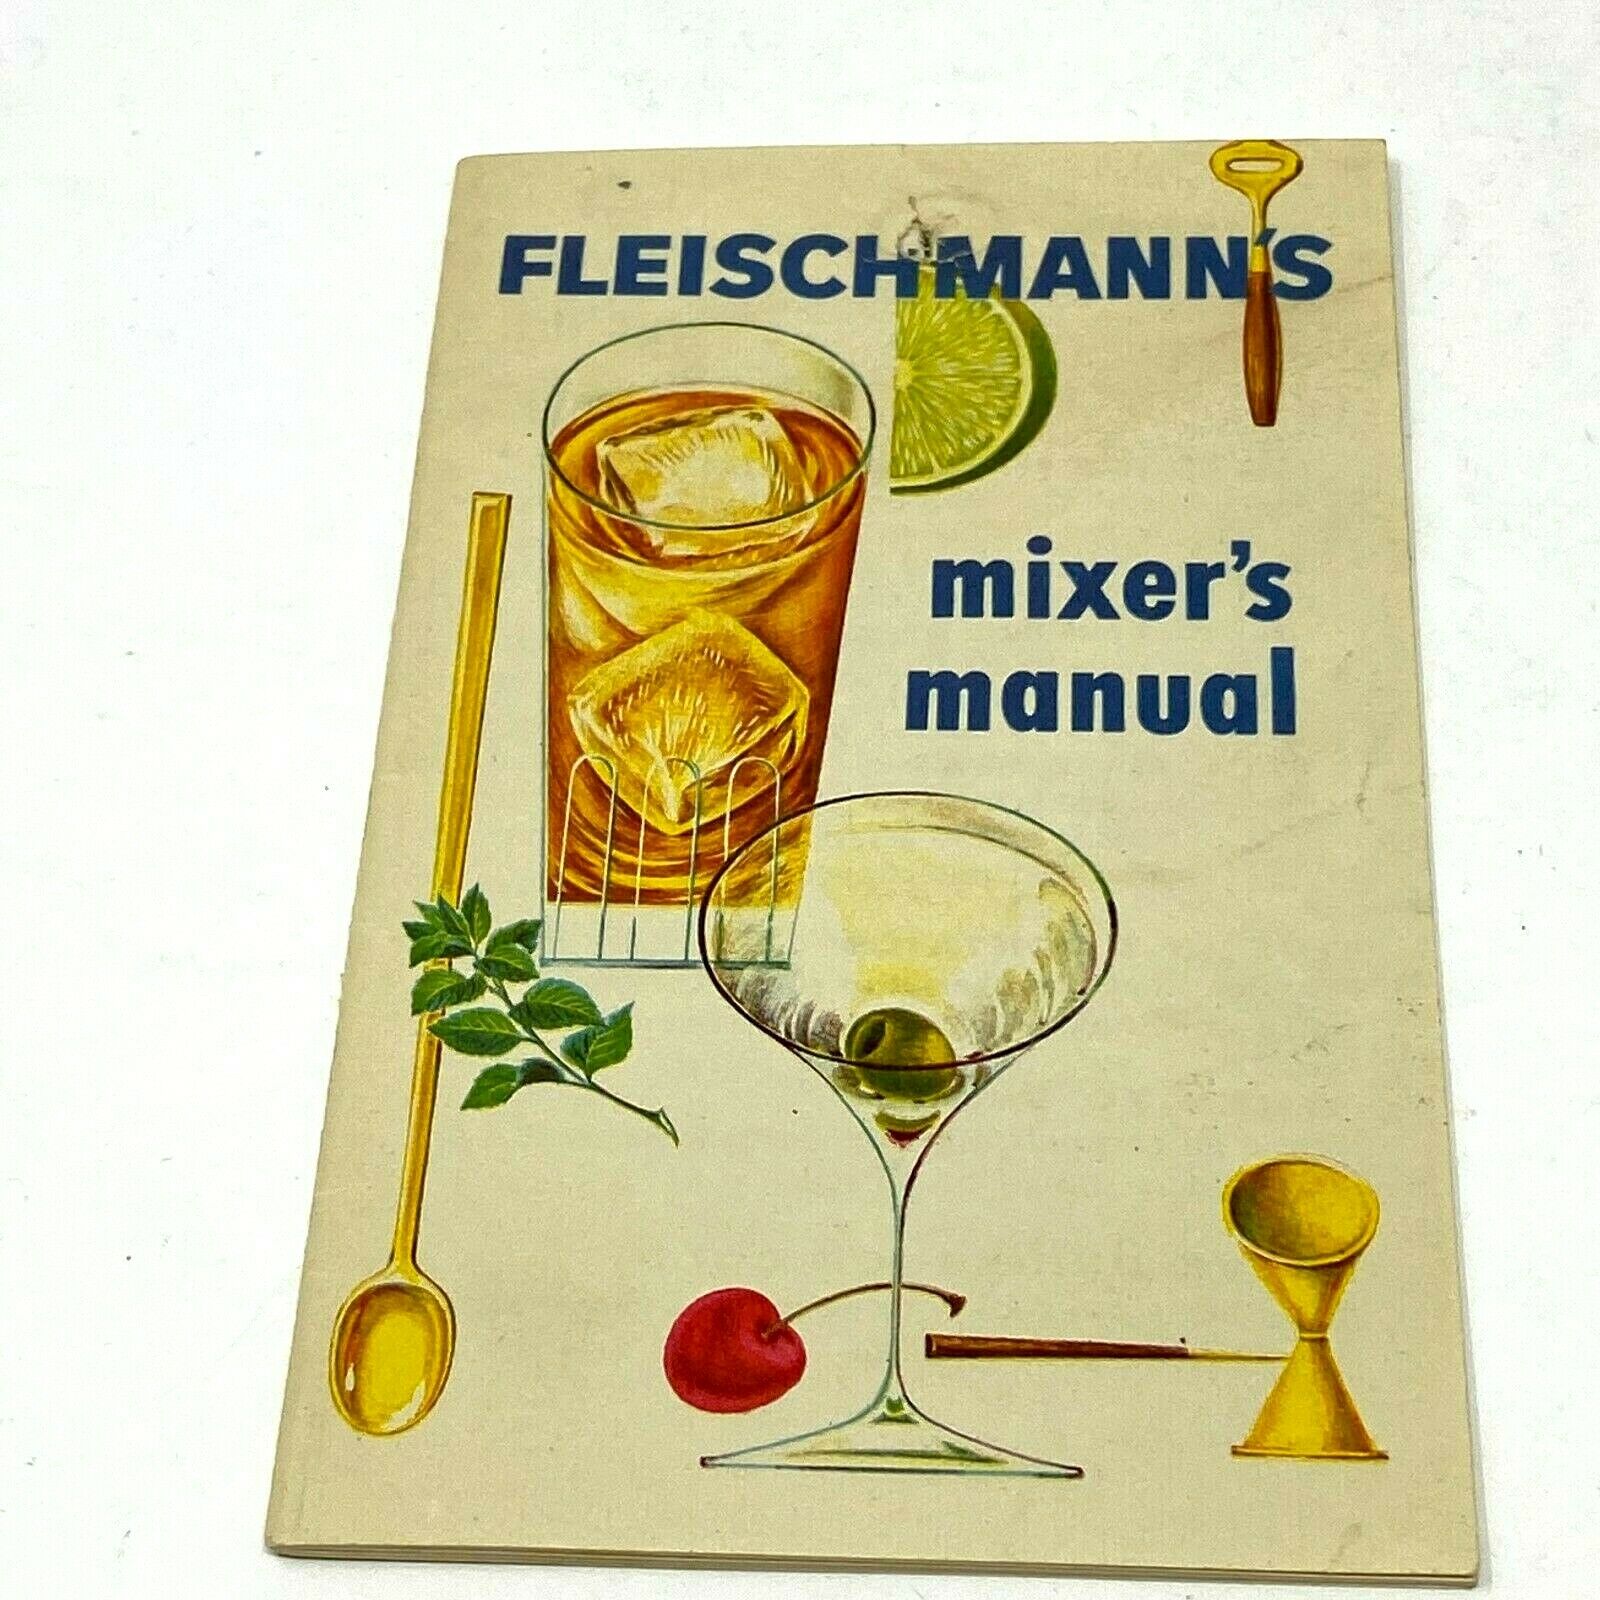 Fleischmann's Mixer's Manual Drink Recipes Booklet